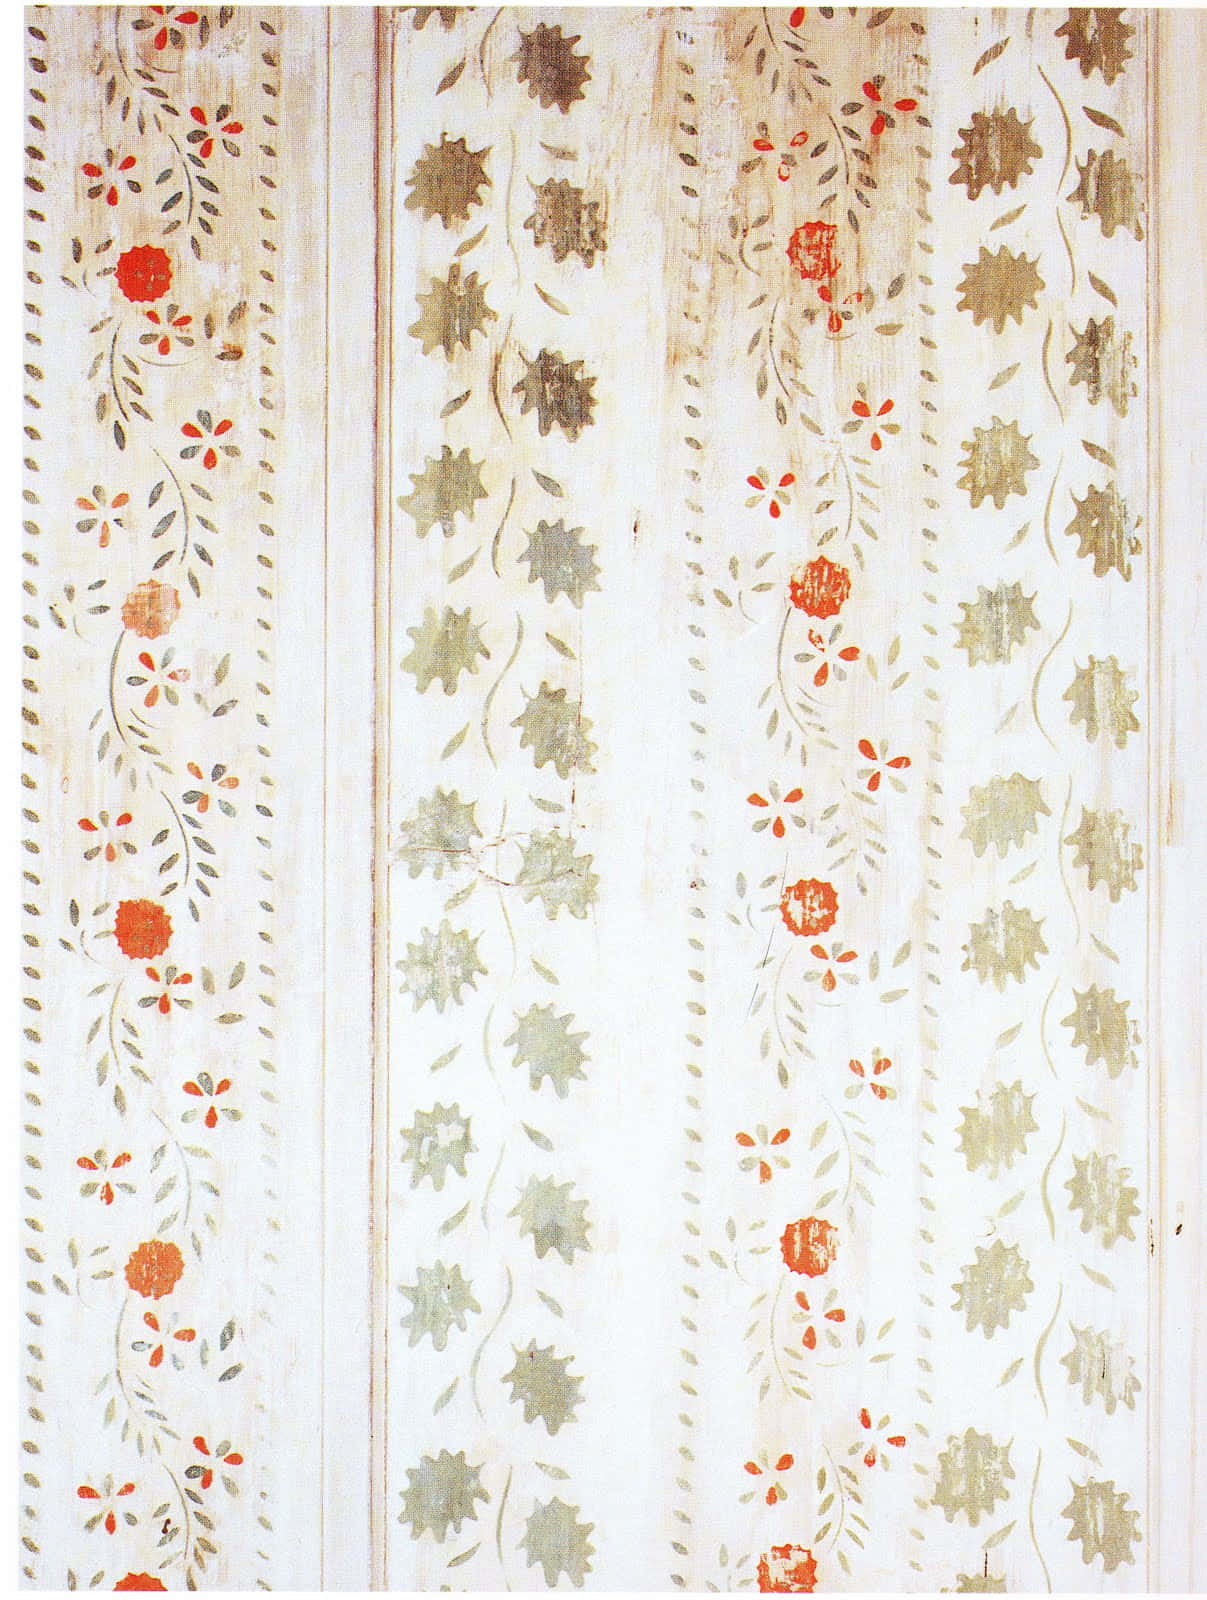 Inherent Floral Water Sequins Wallpaper